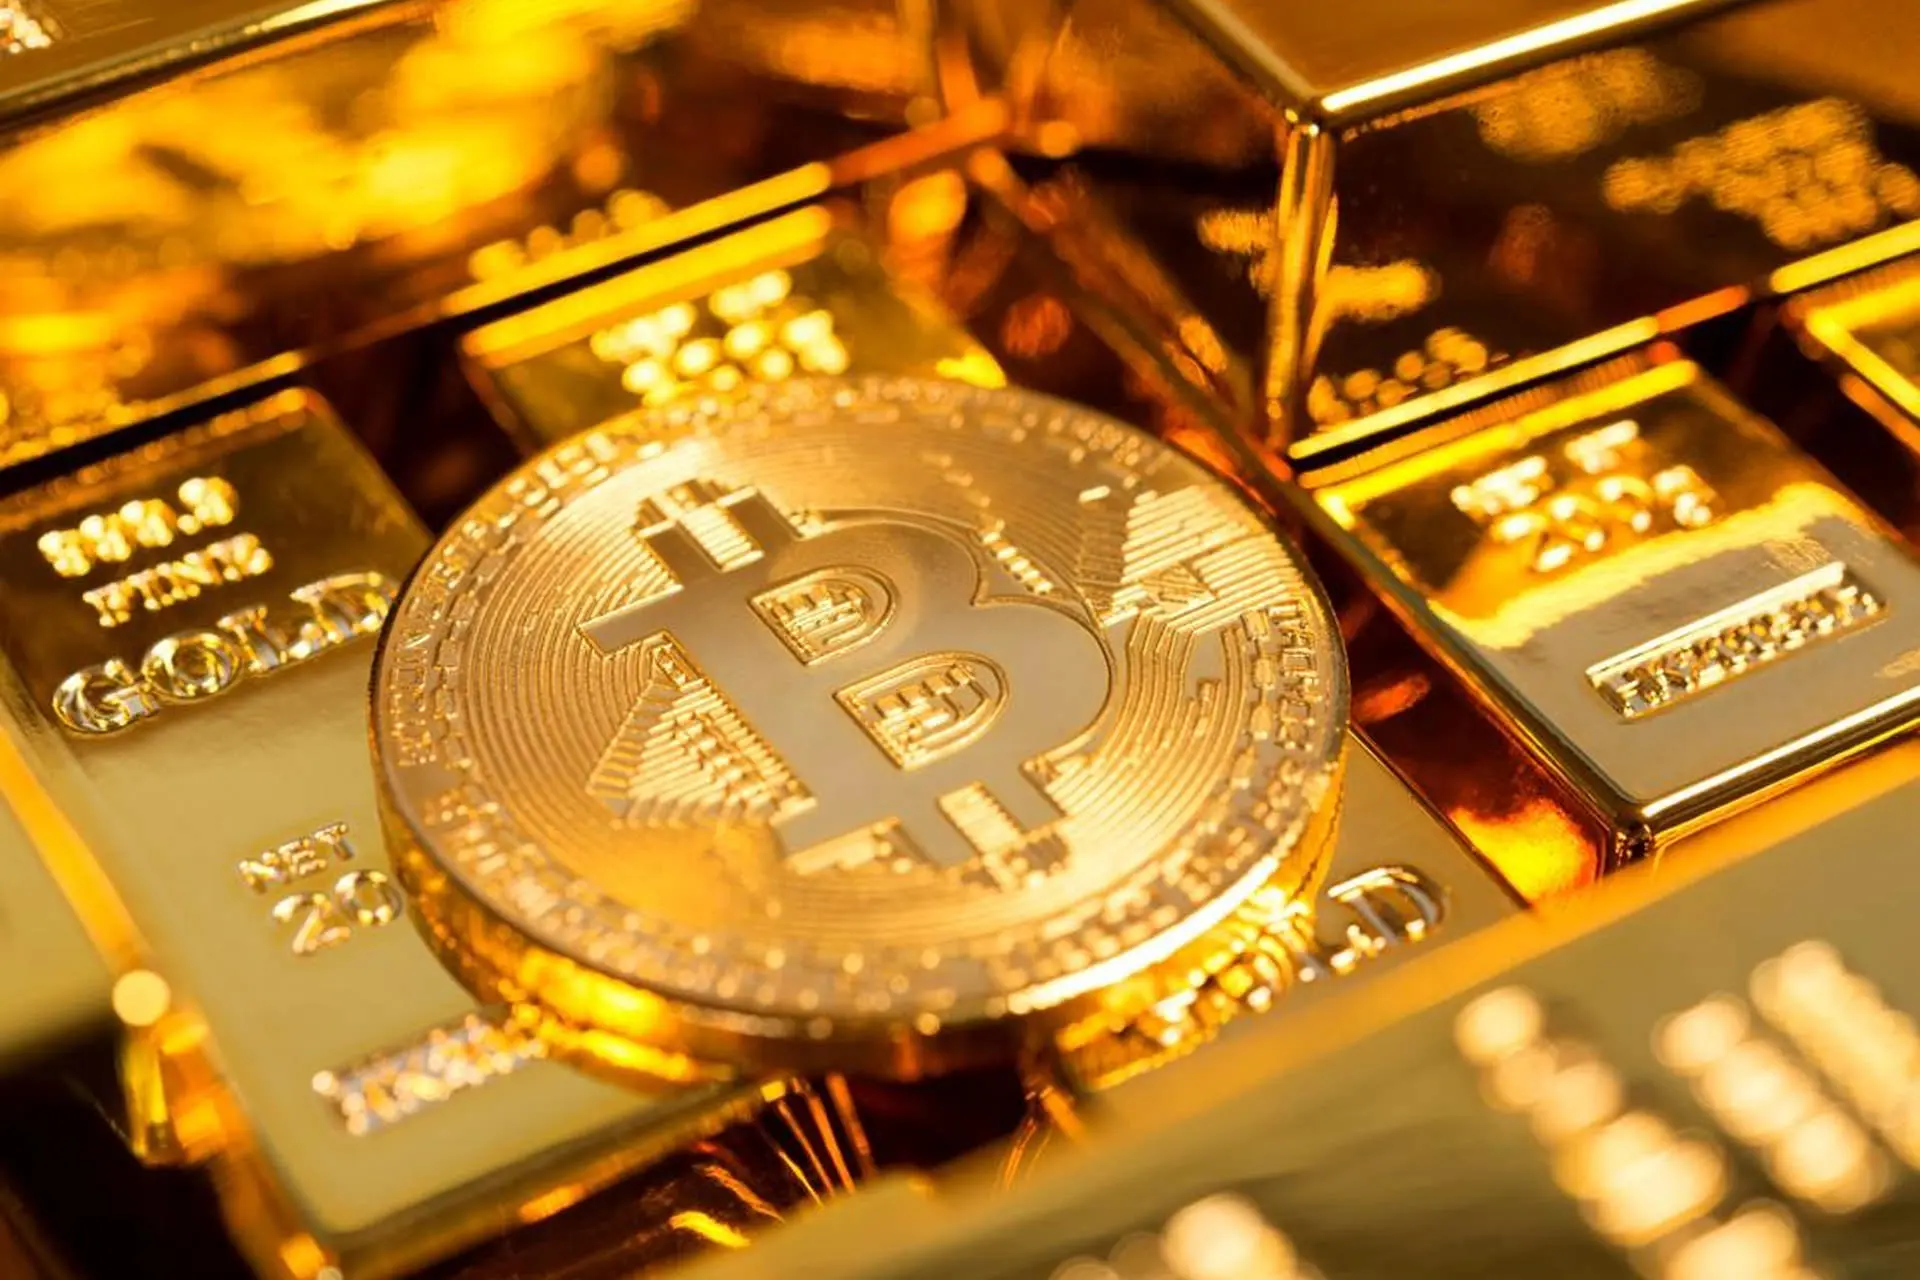 Bitcoin coin / Bitcoin / Bitcoin next to gold bars